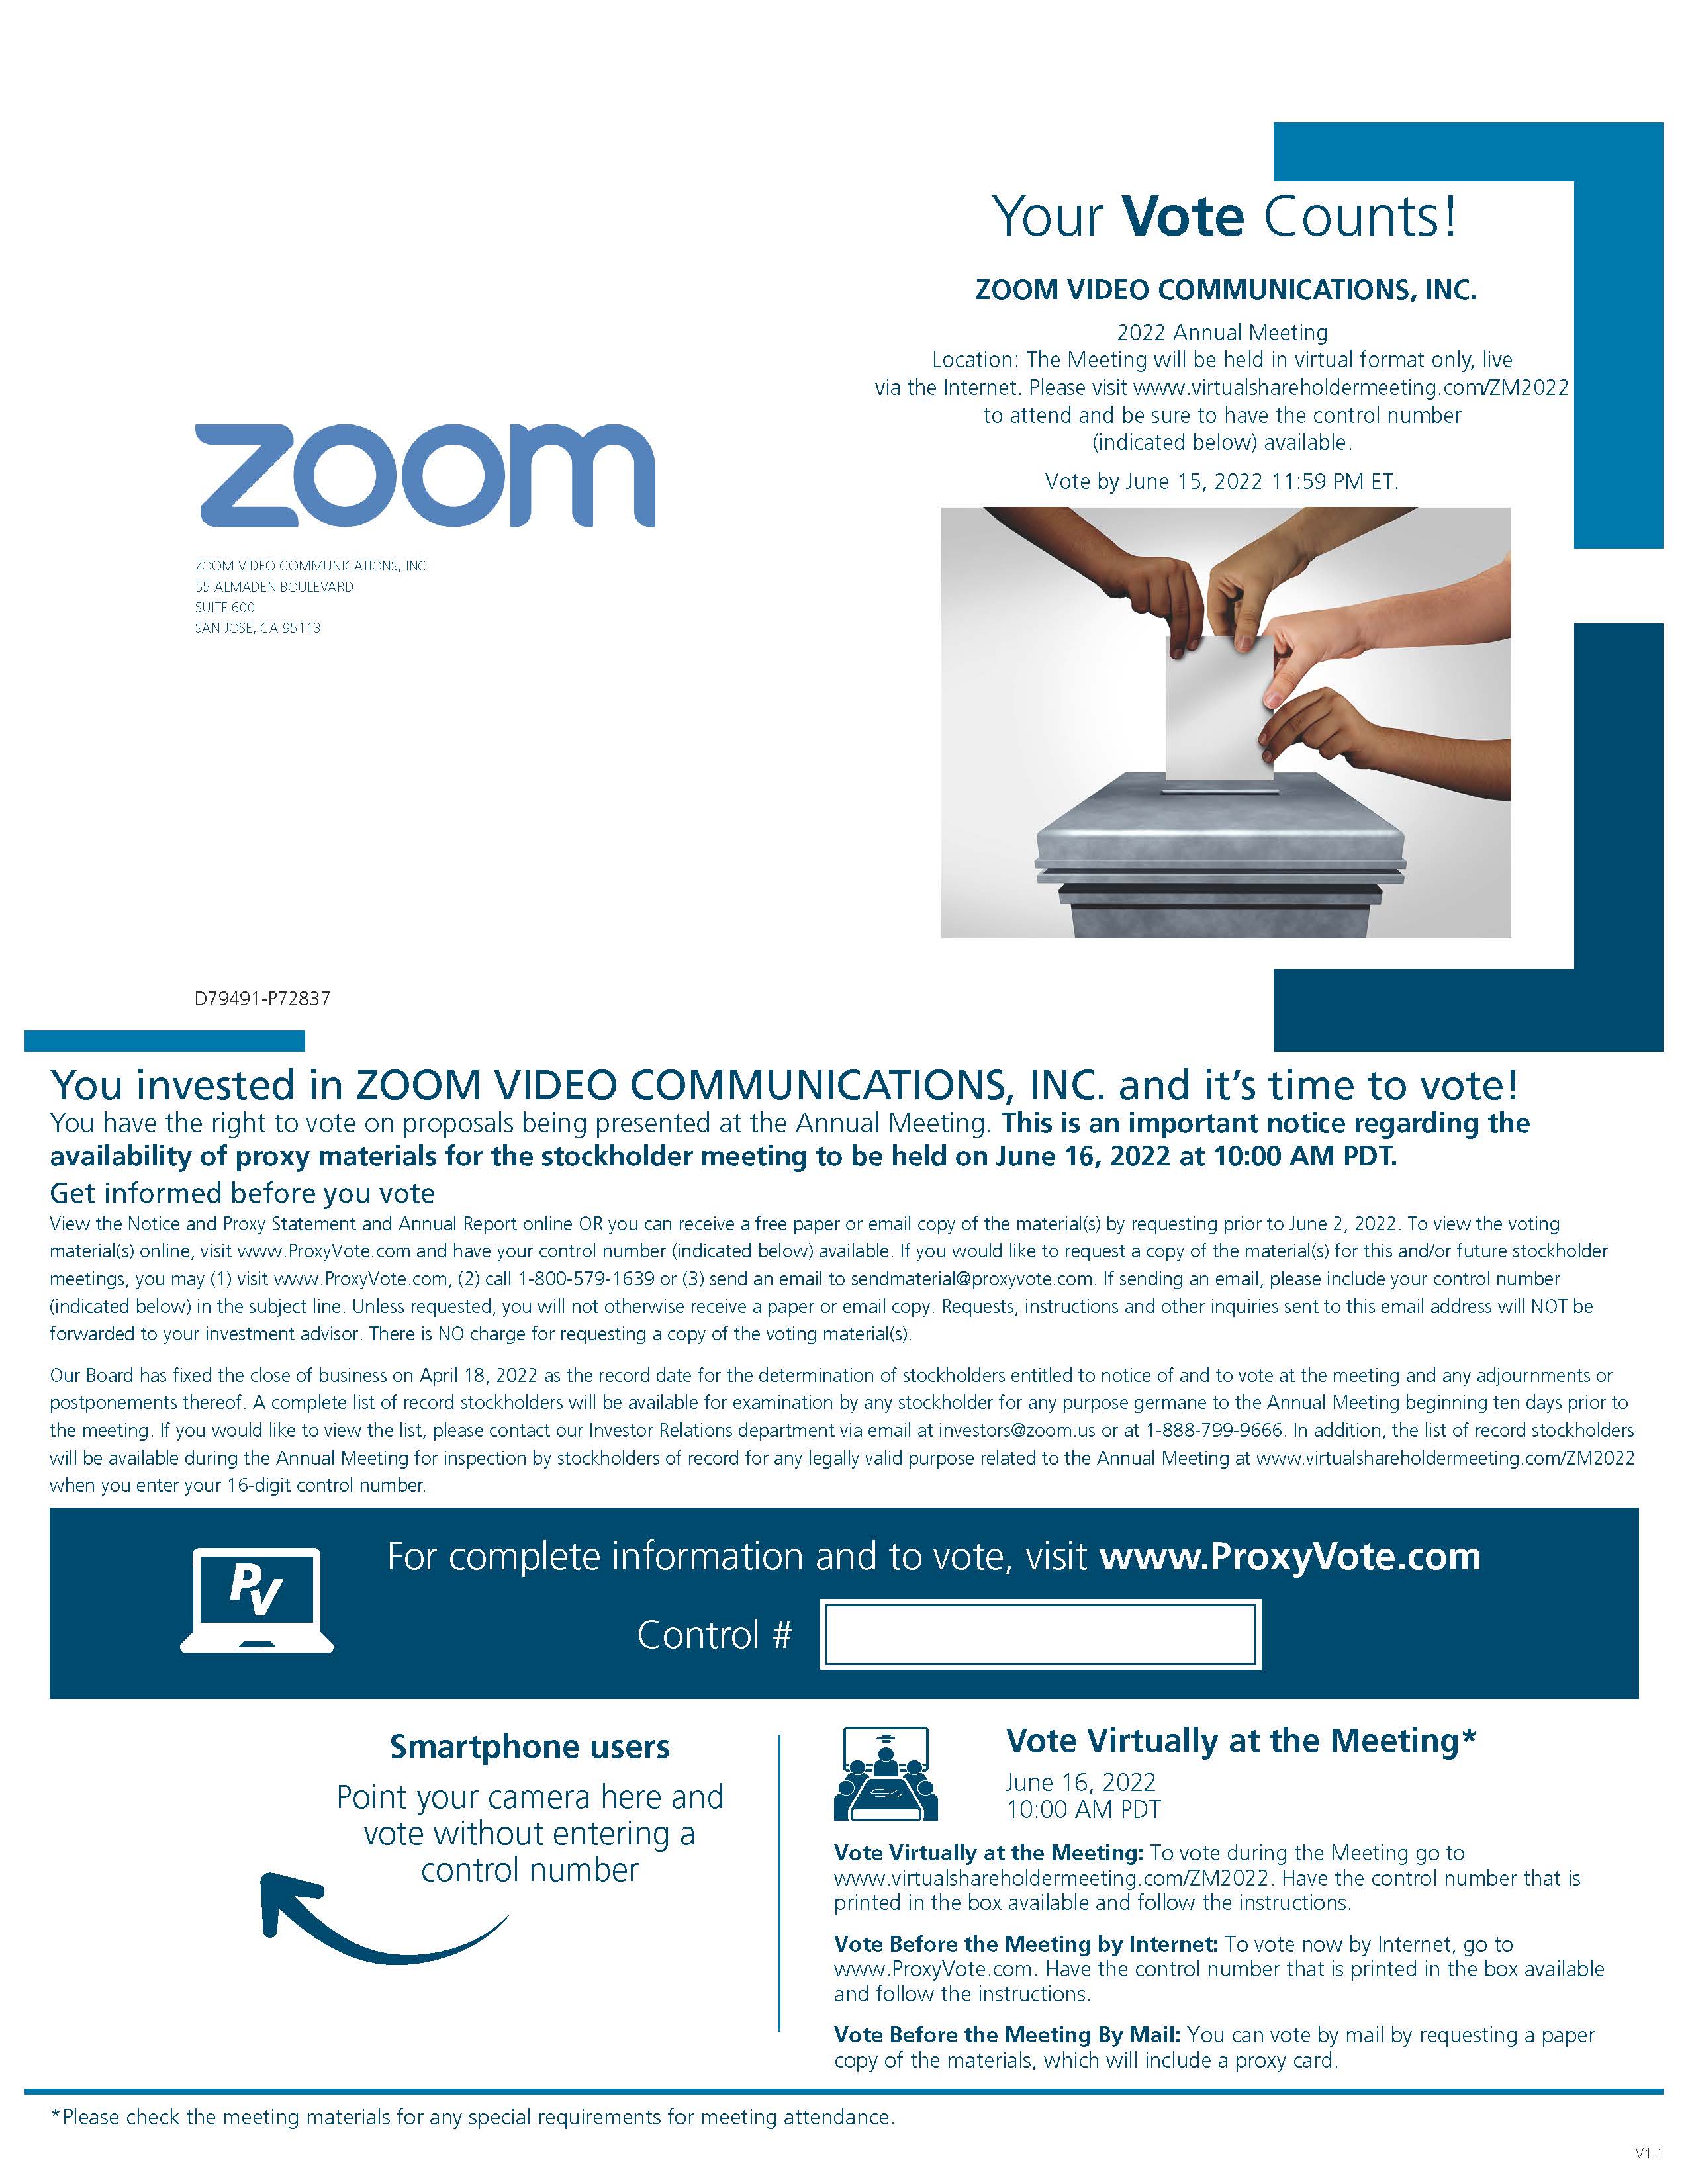 zoomvideocommunicationsinca.jpg